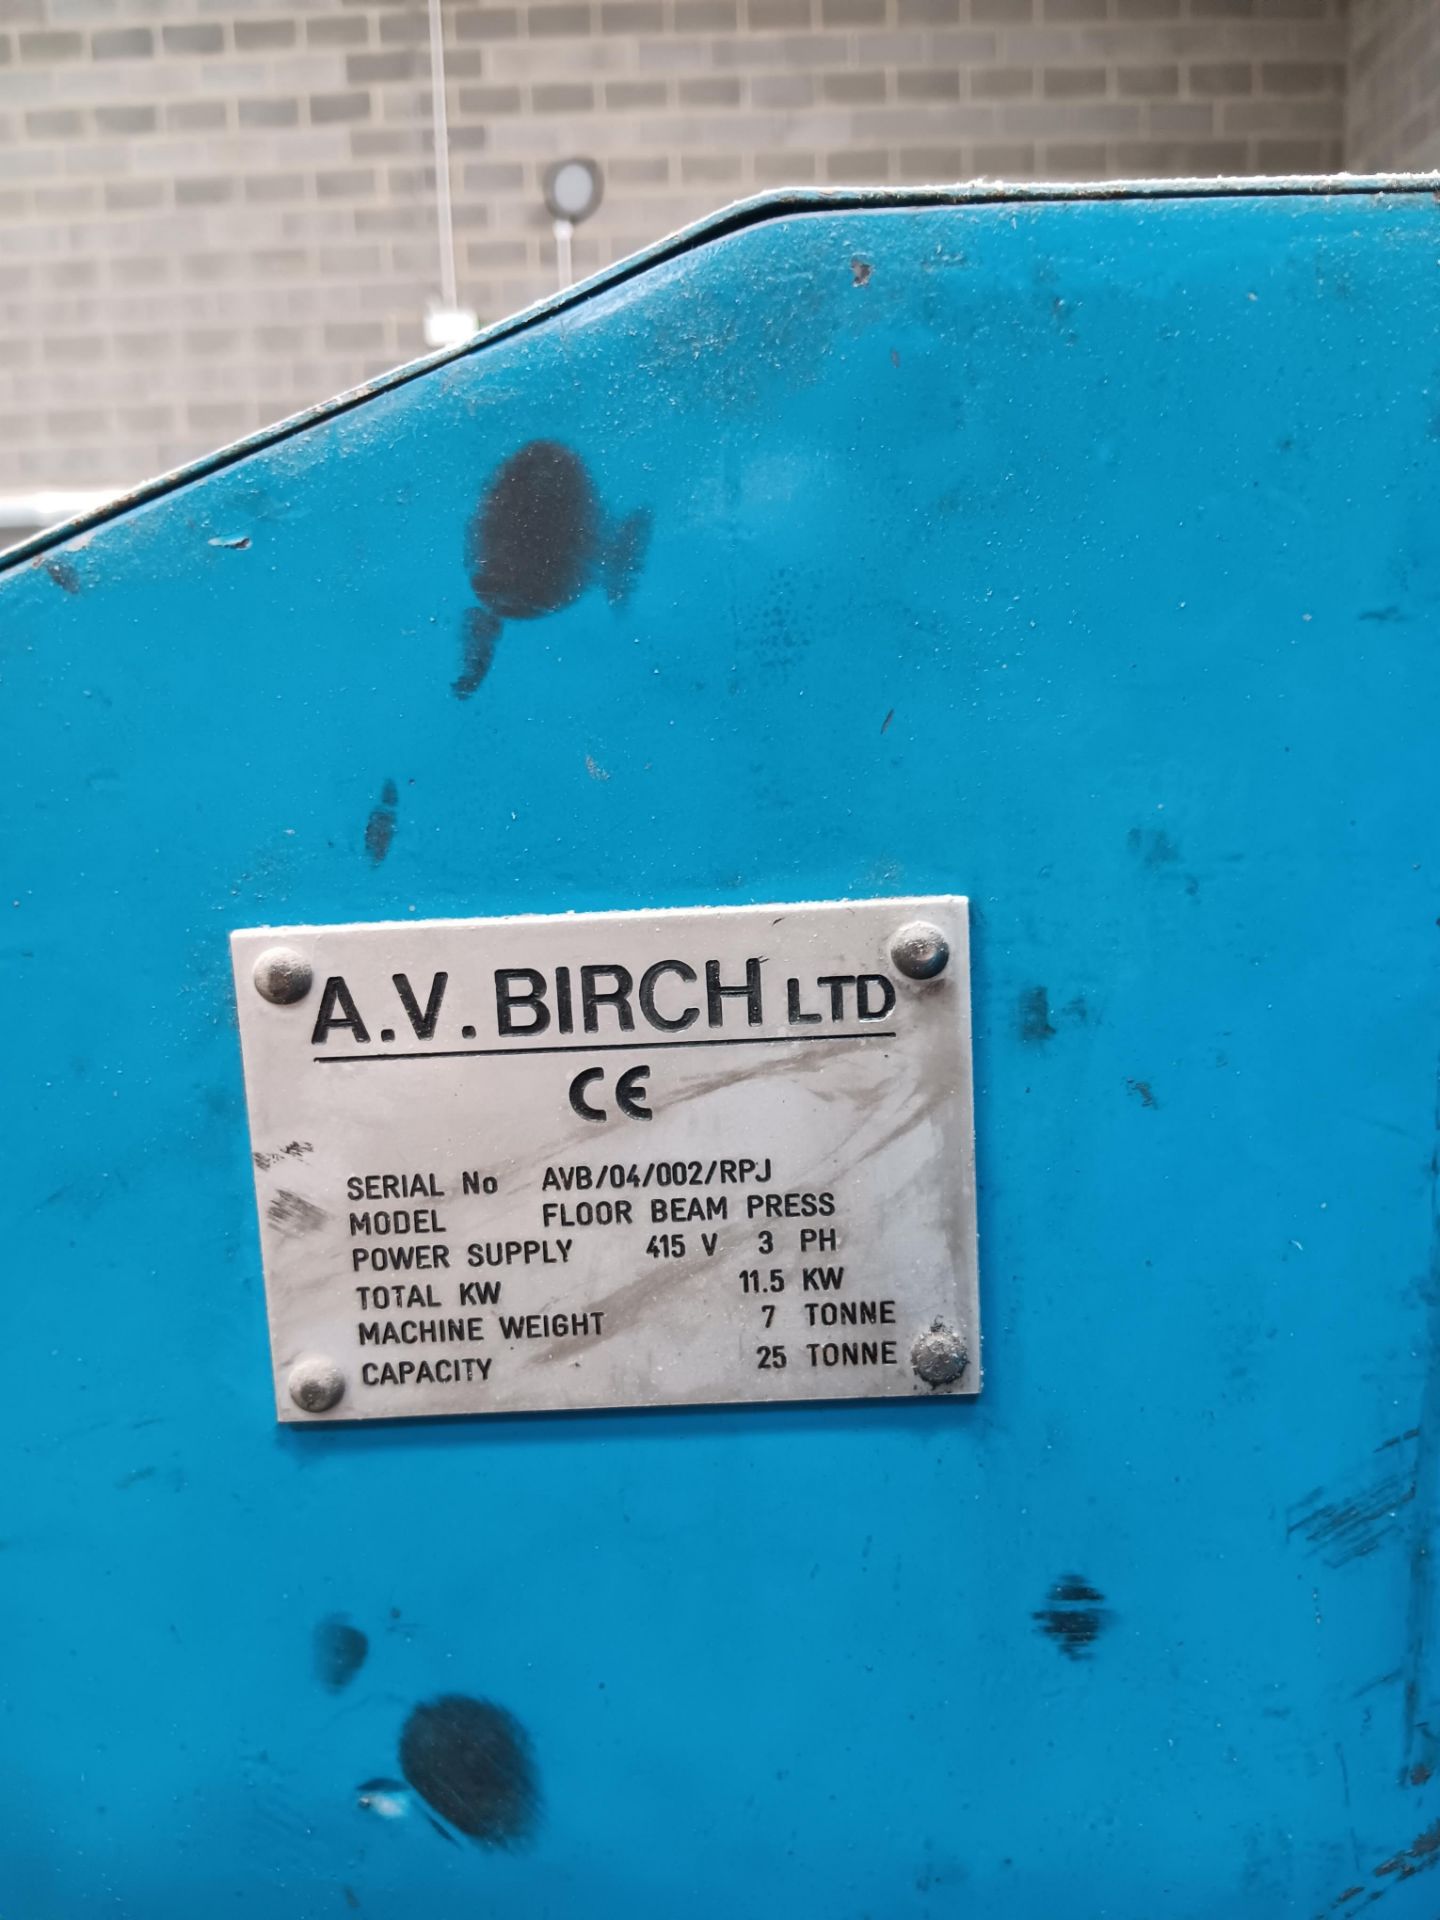 Birch floor beam press Serial number AVB/04/002/RPJ - Bild 2 aus 4